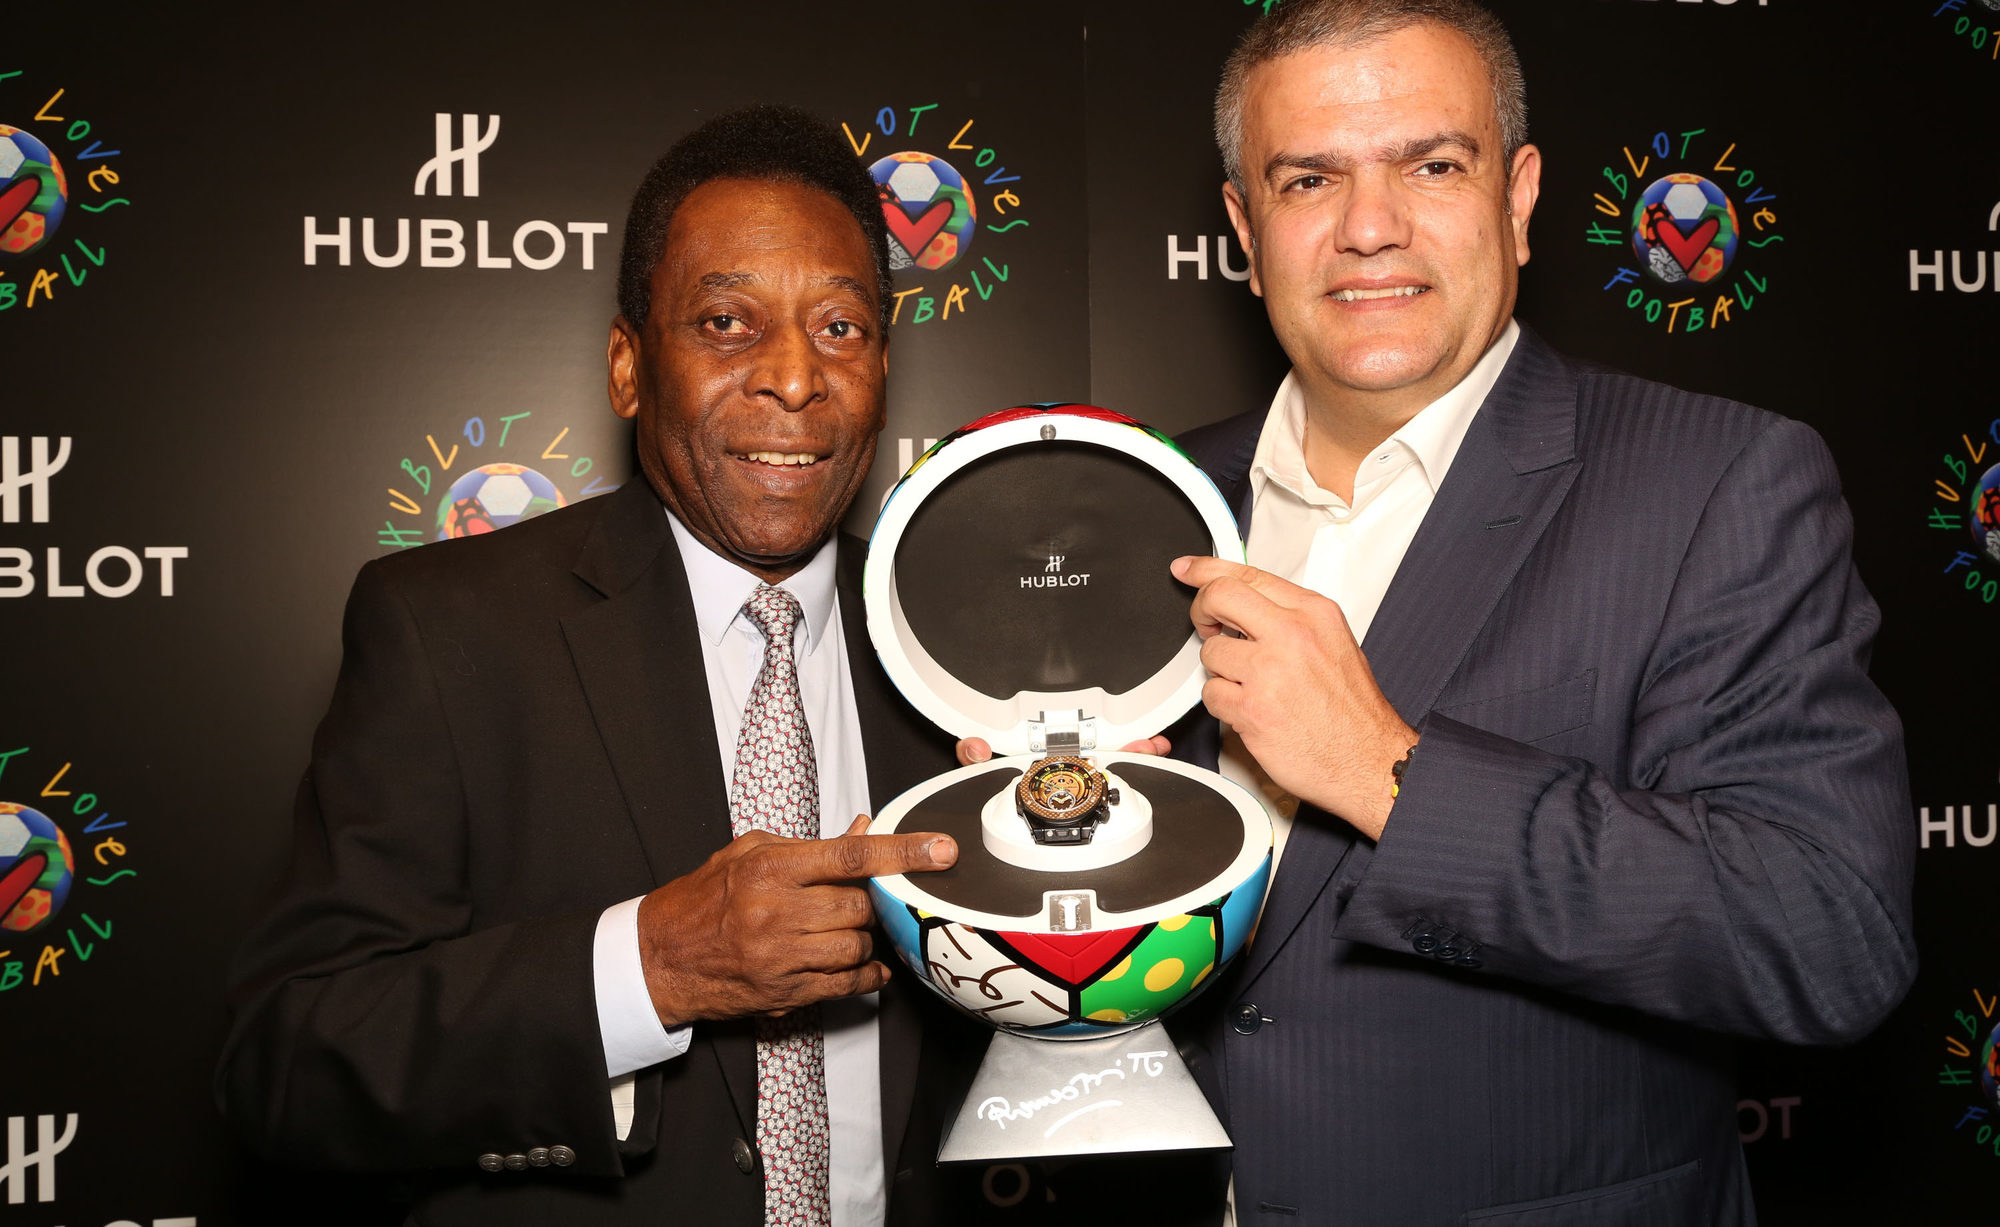 HUBLOT KICKS OFF “HUBLOT LOVES FOOTBALL” CAMPAIGN IN UNIQUE STYLE